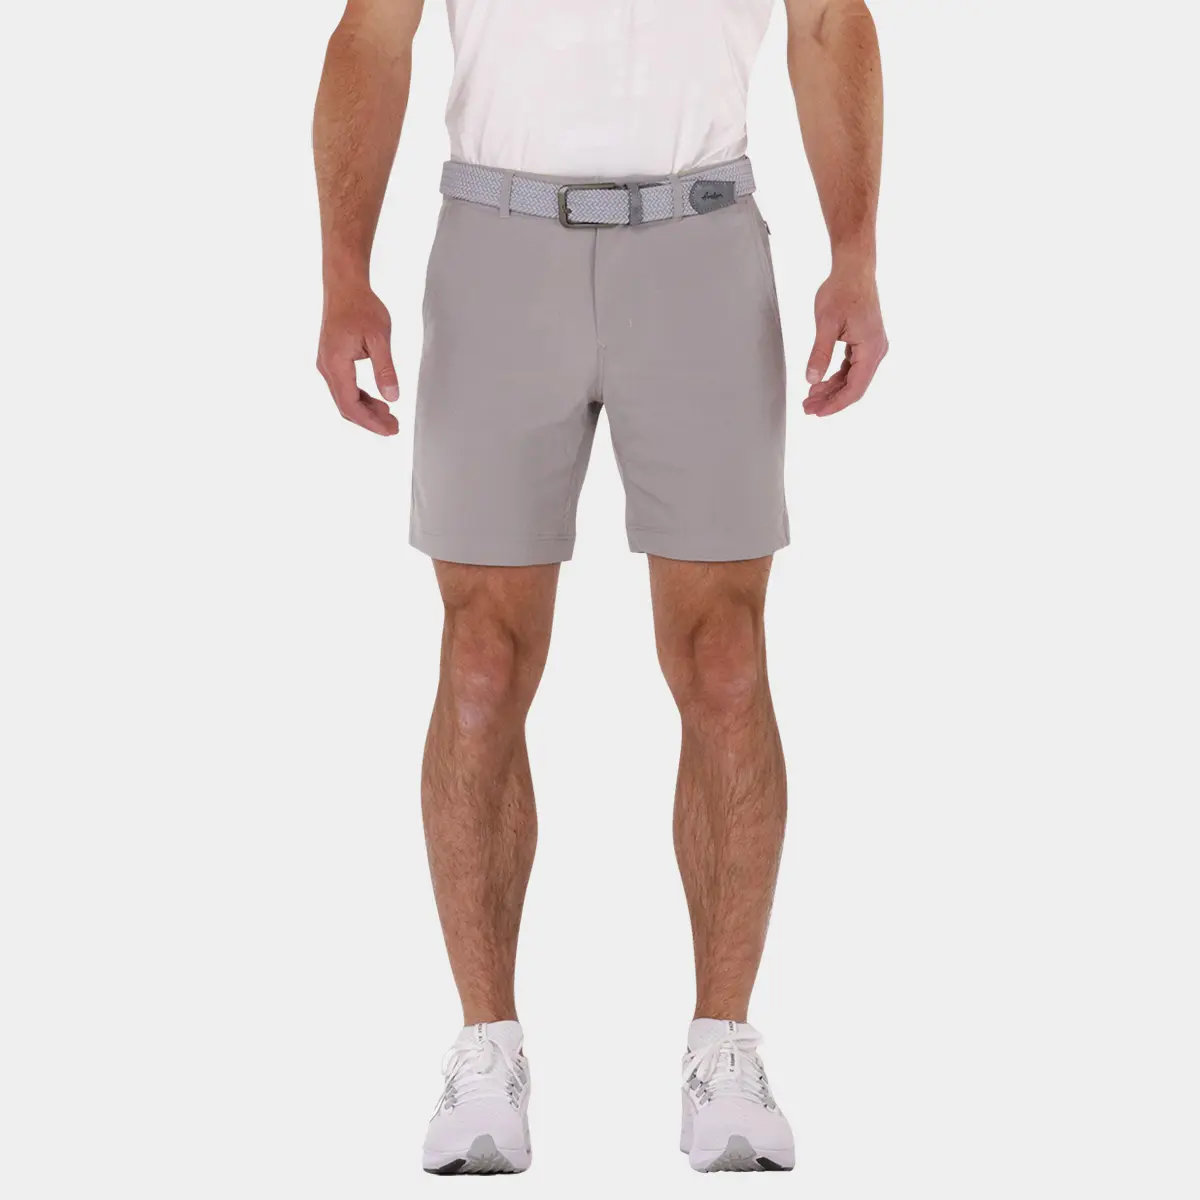 https://www.avalongolf.co/wp-content/uploads/7-inch-golf-shorts-gray-1.jpg